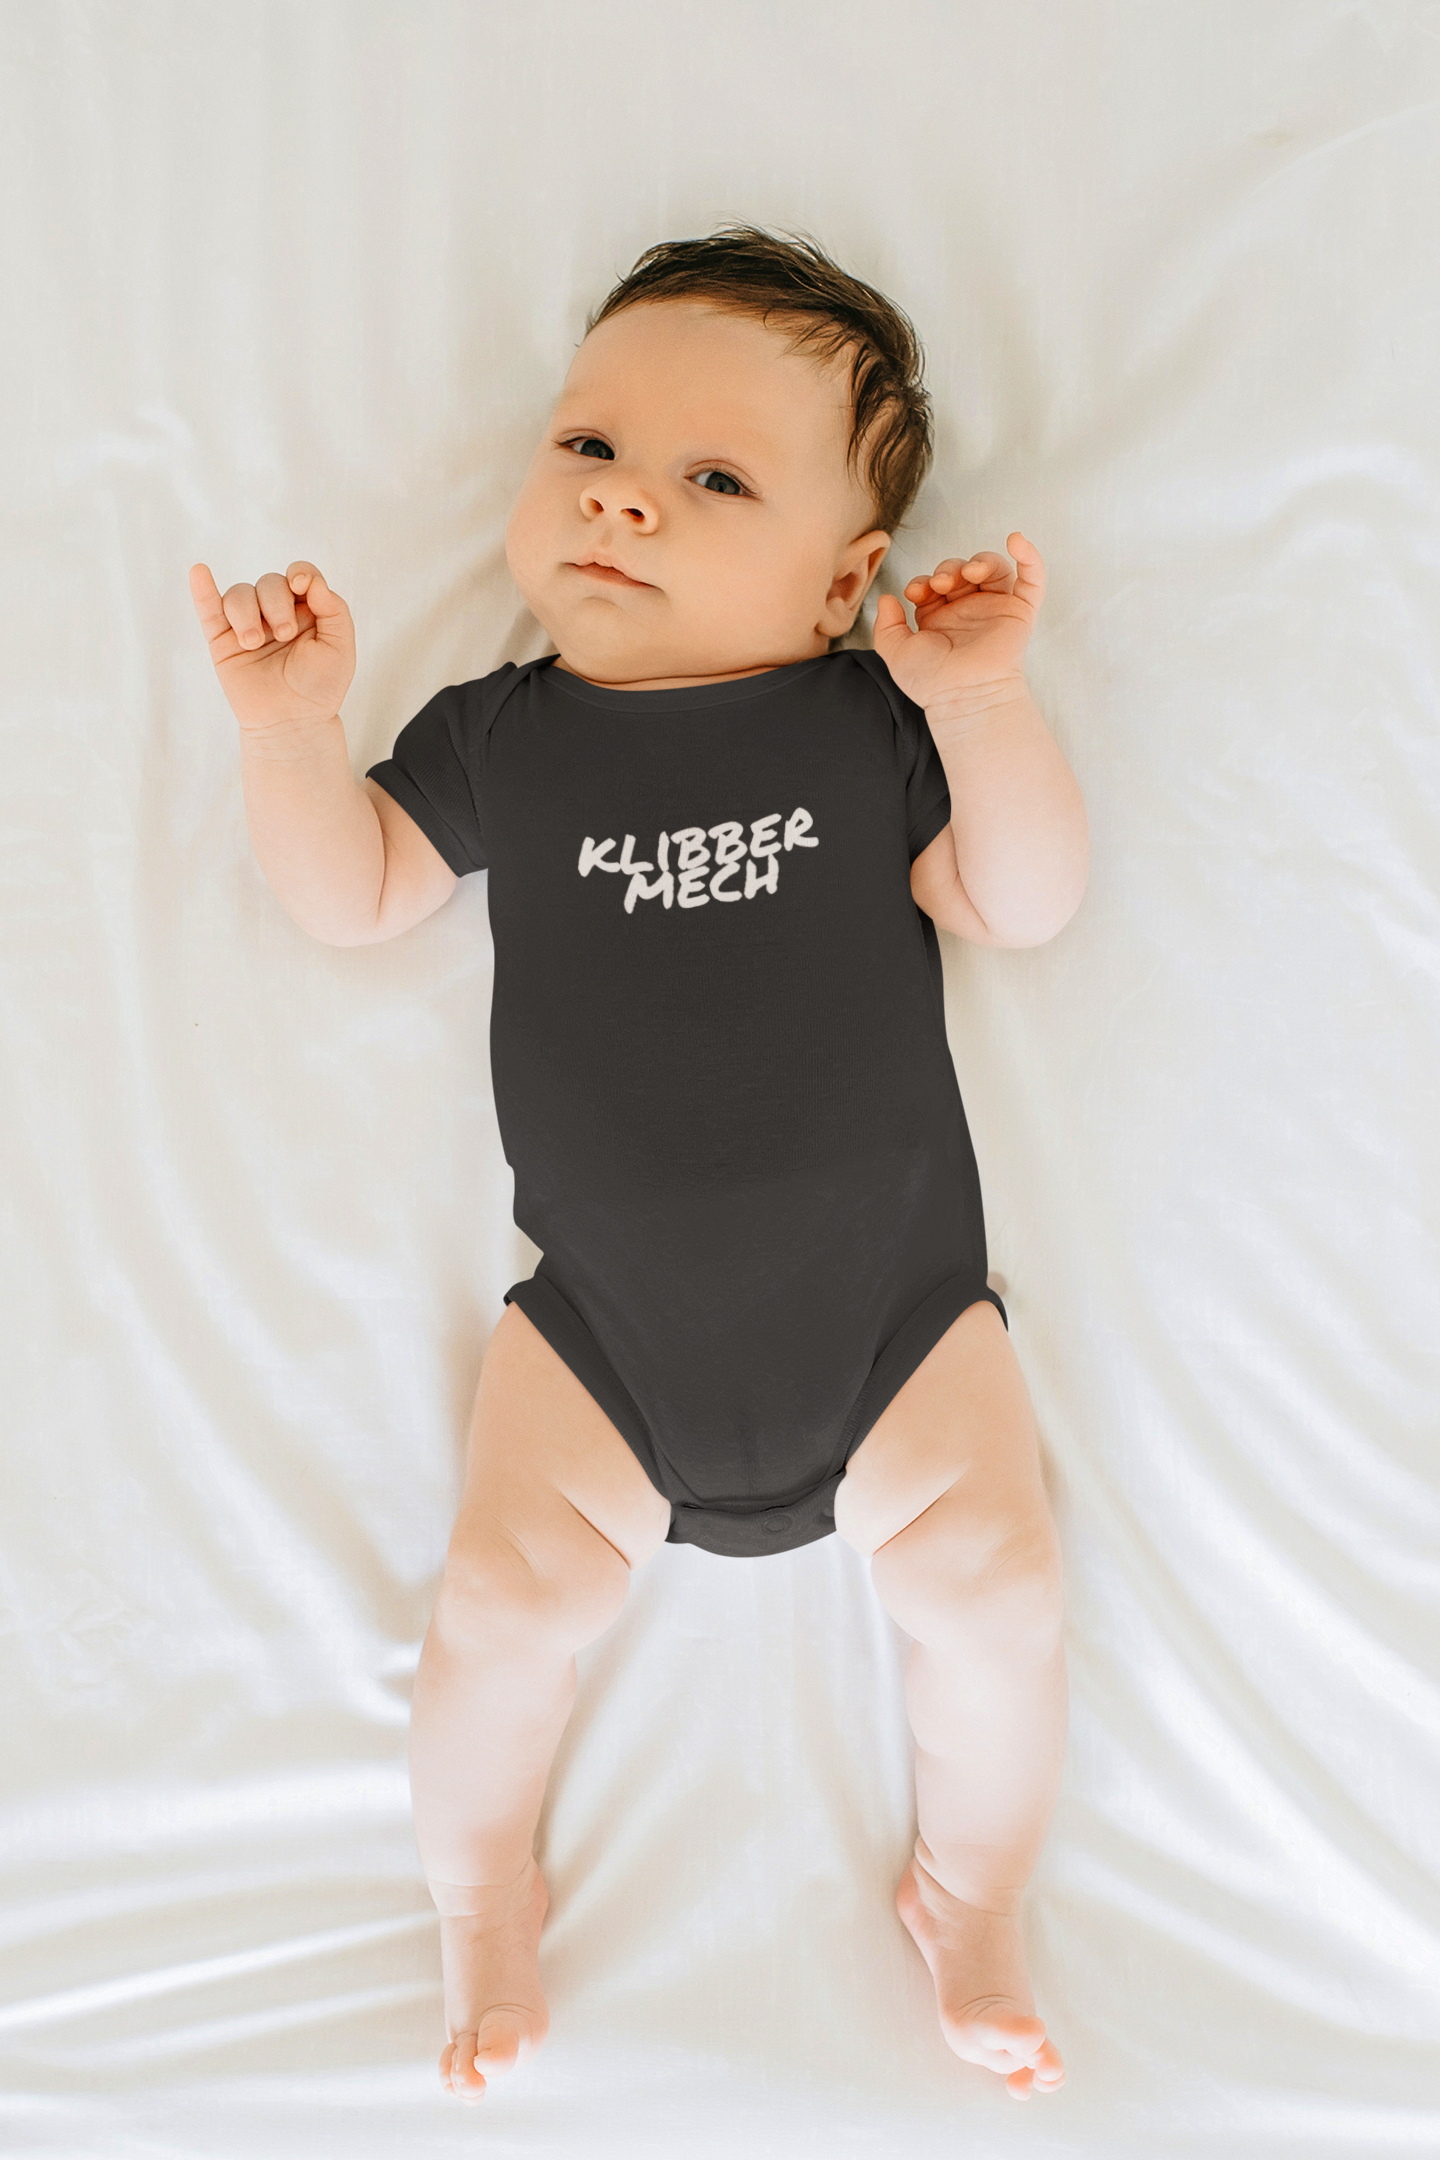 Klibber Mech - dark  - Baby Body